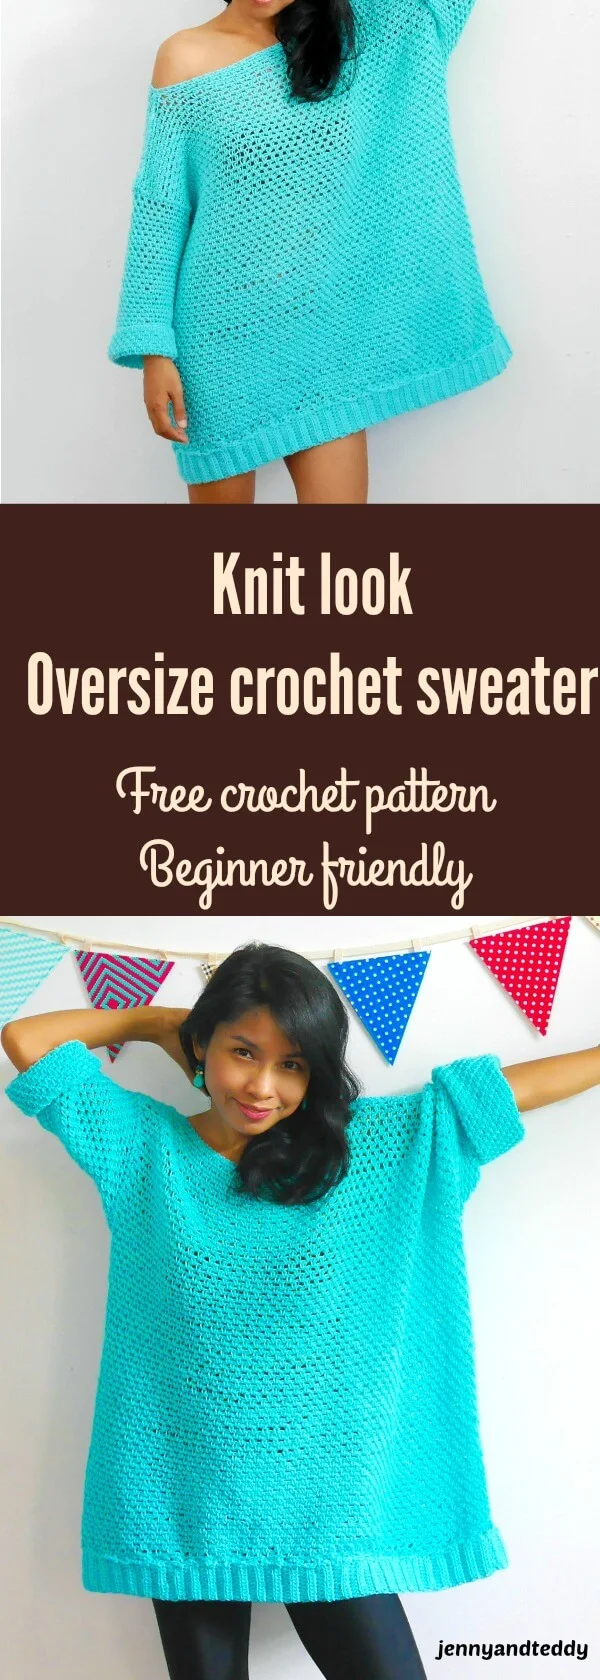 knit look oversize crochet sweater beginner friendly use moss stitch or linen stitch